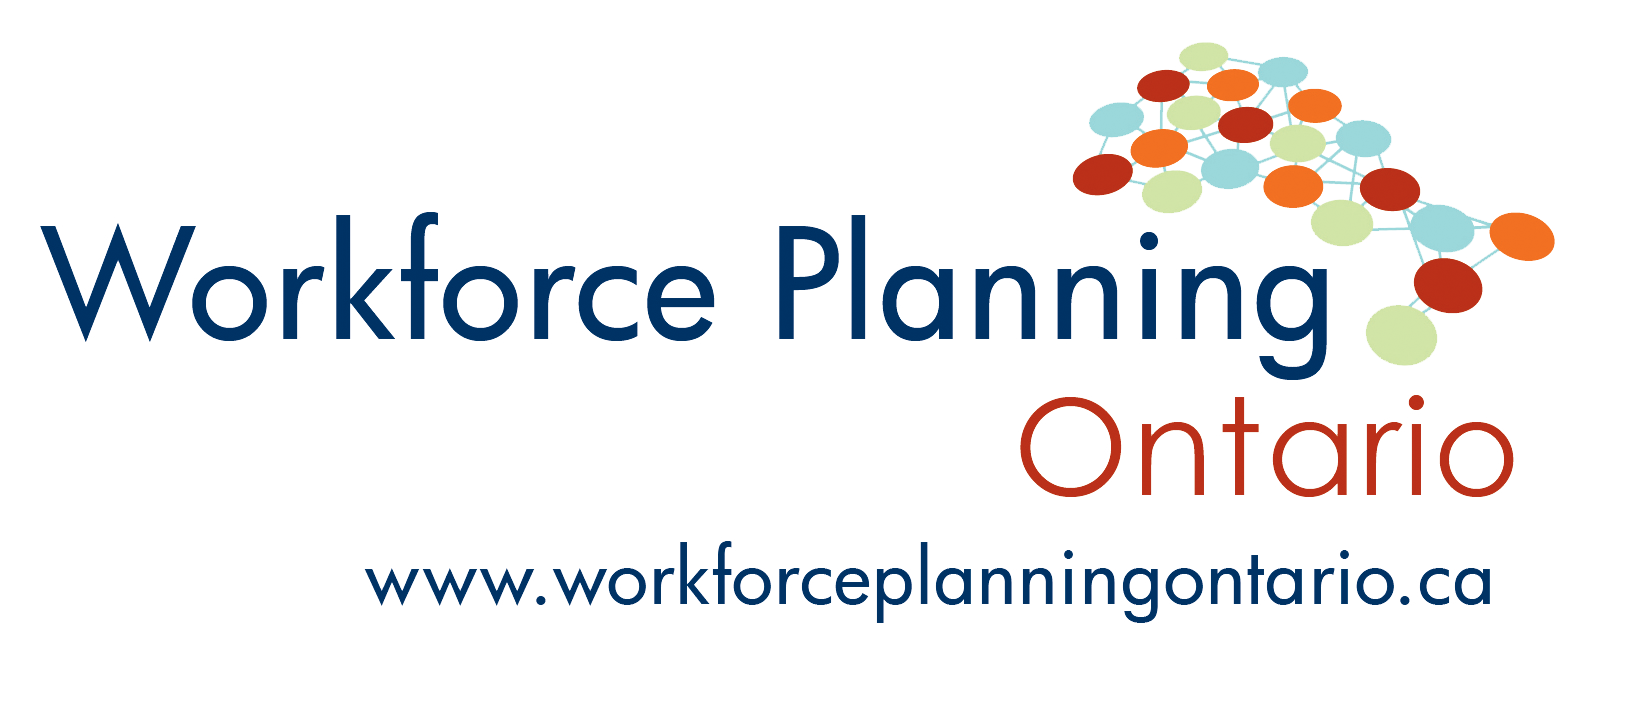 Workforce Planning Ontario